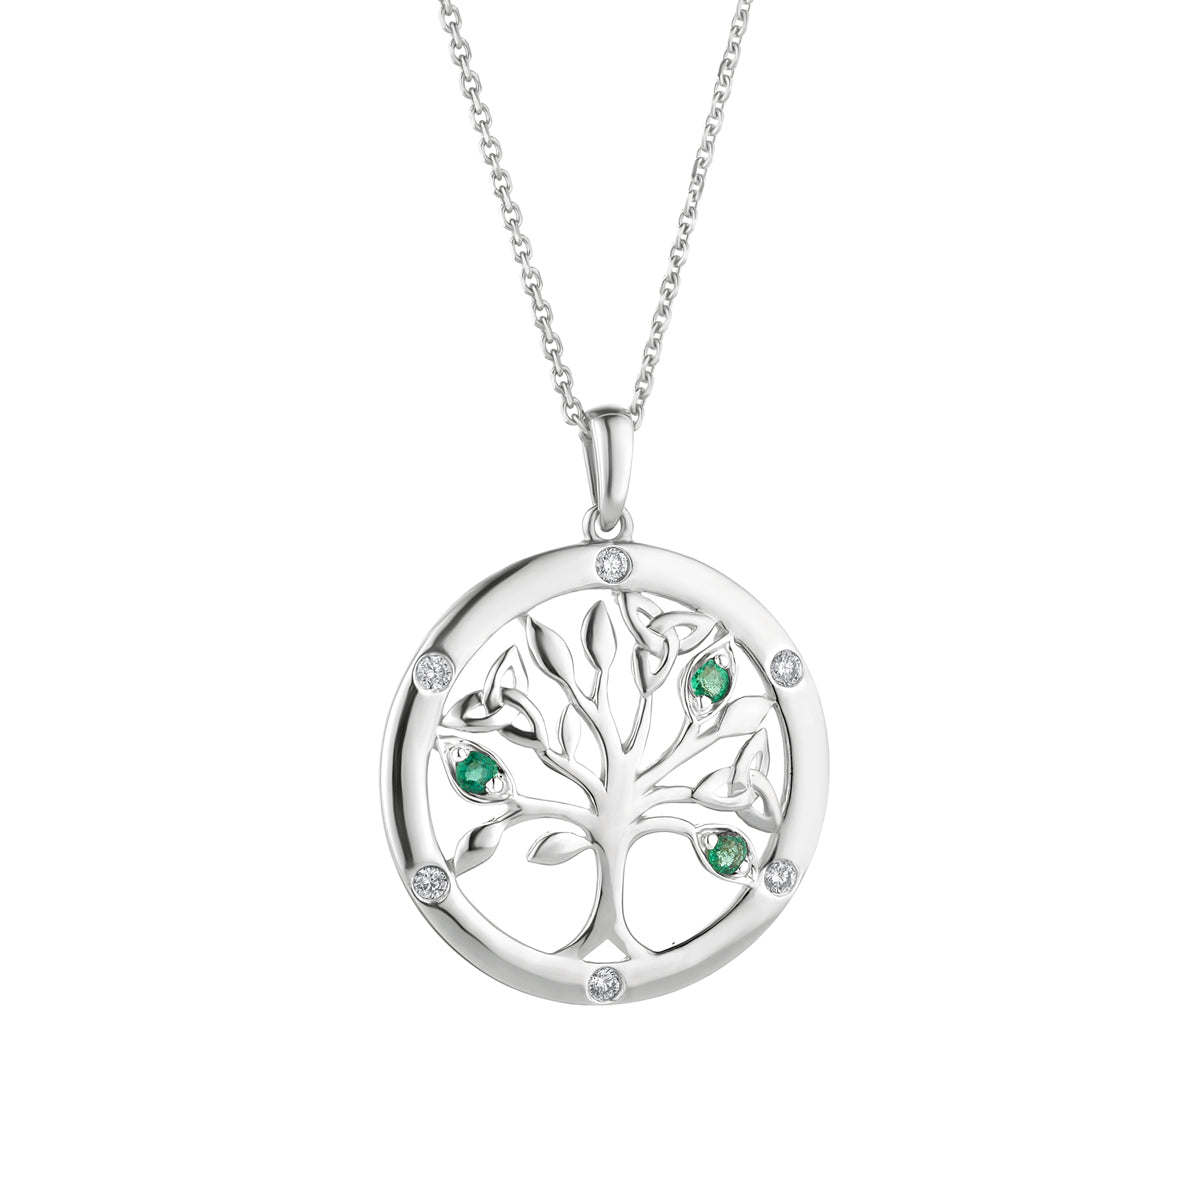 White Gold Flush Set Gemstones Tree of Life Necklace S46975 from Solvar Irish Jewellery